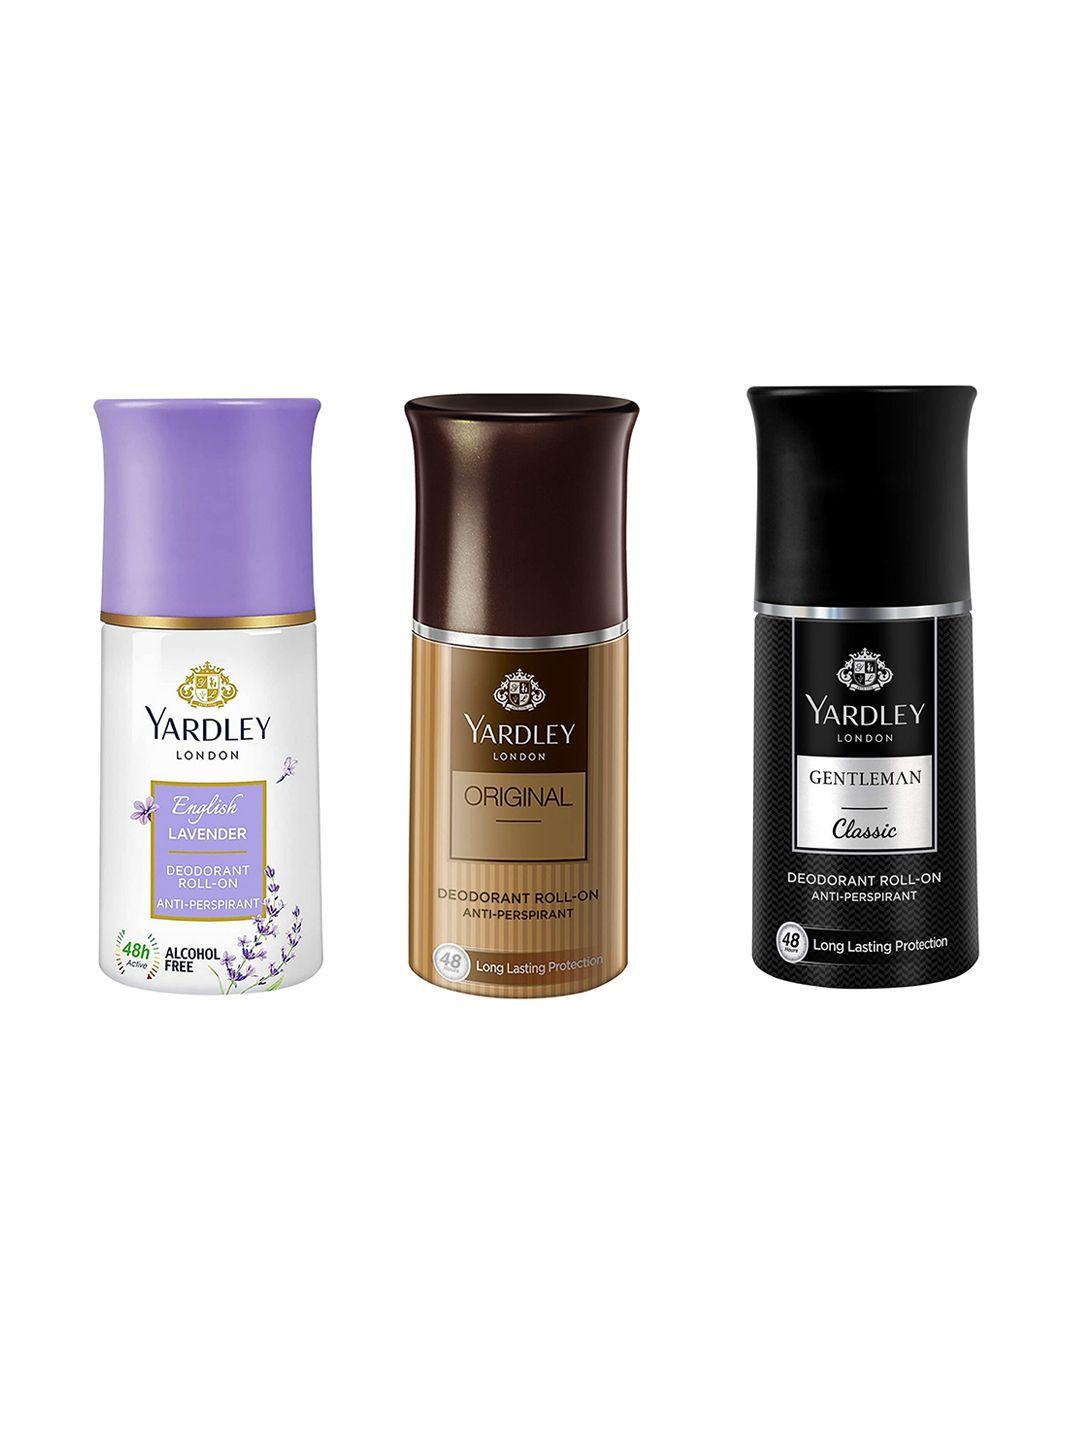 yardley london set of 3 anti-perspirant alcohol free deodorant roll-ons - 50ml each